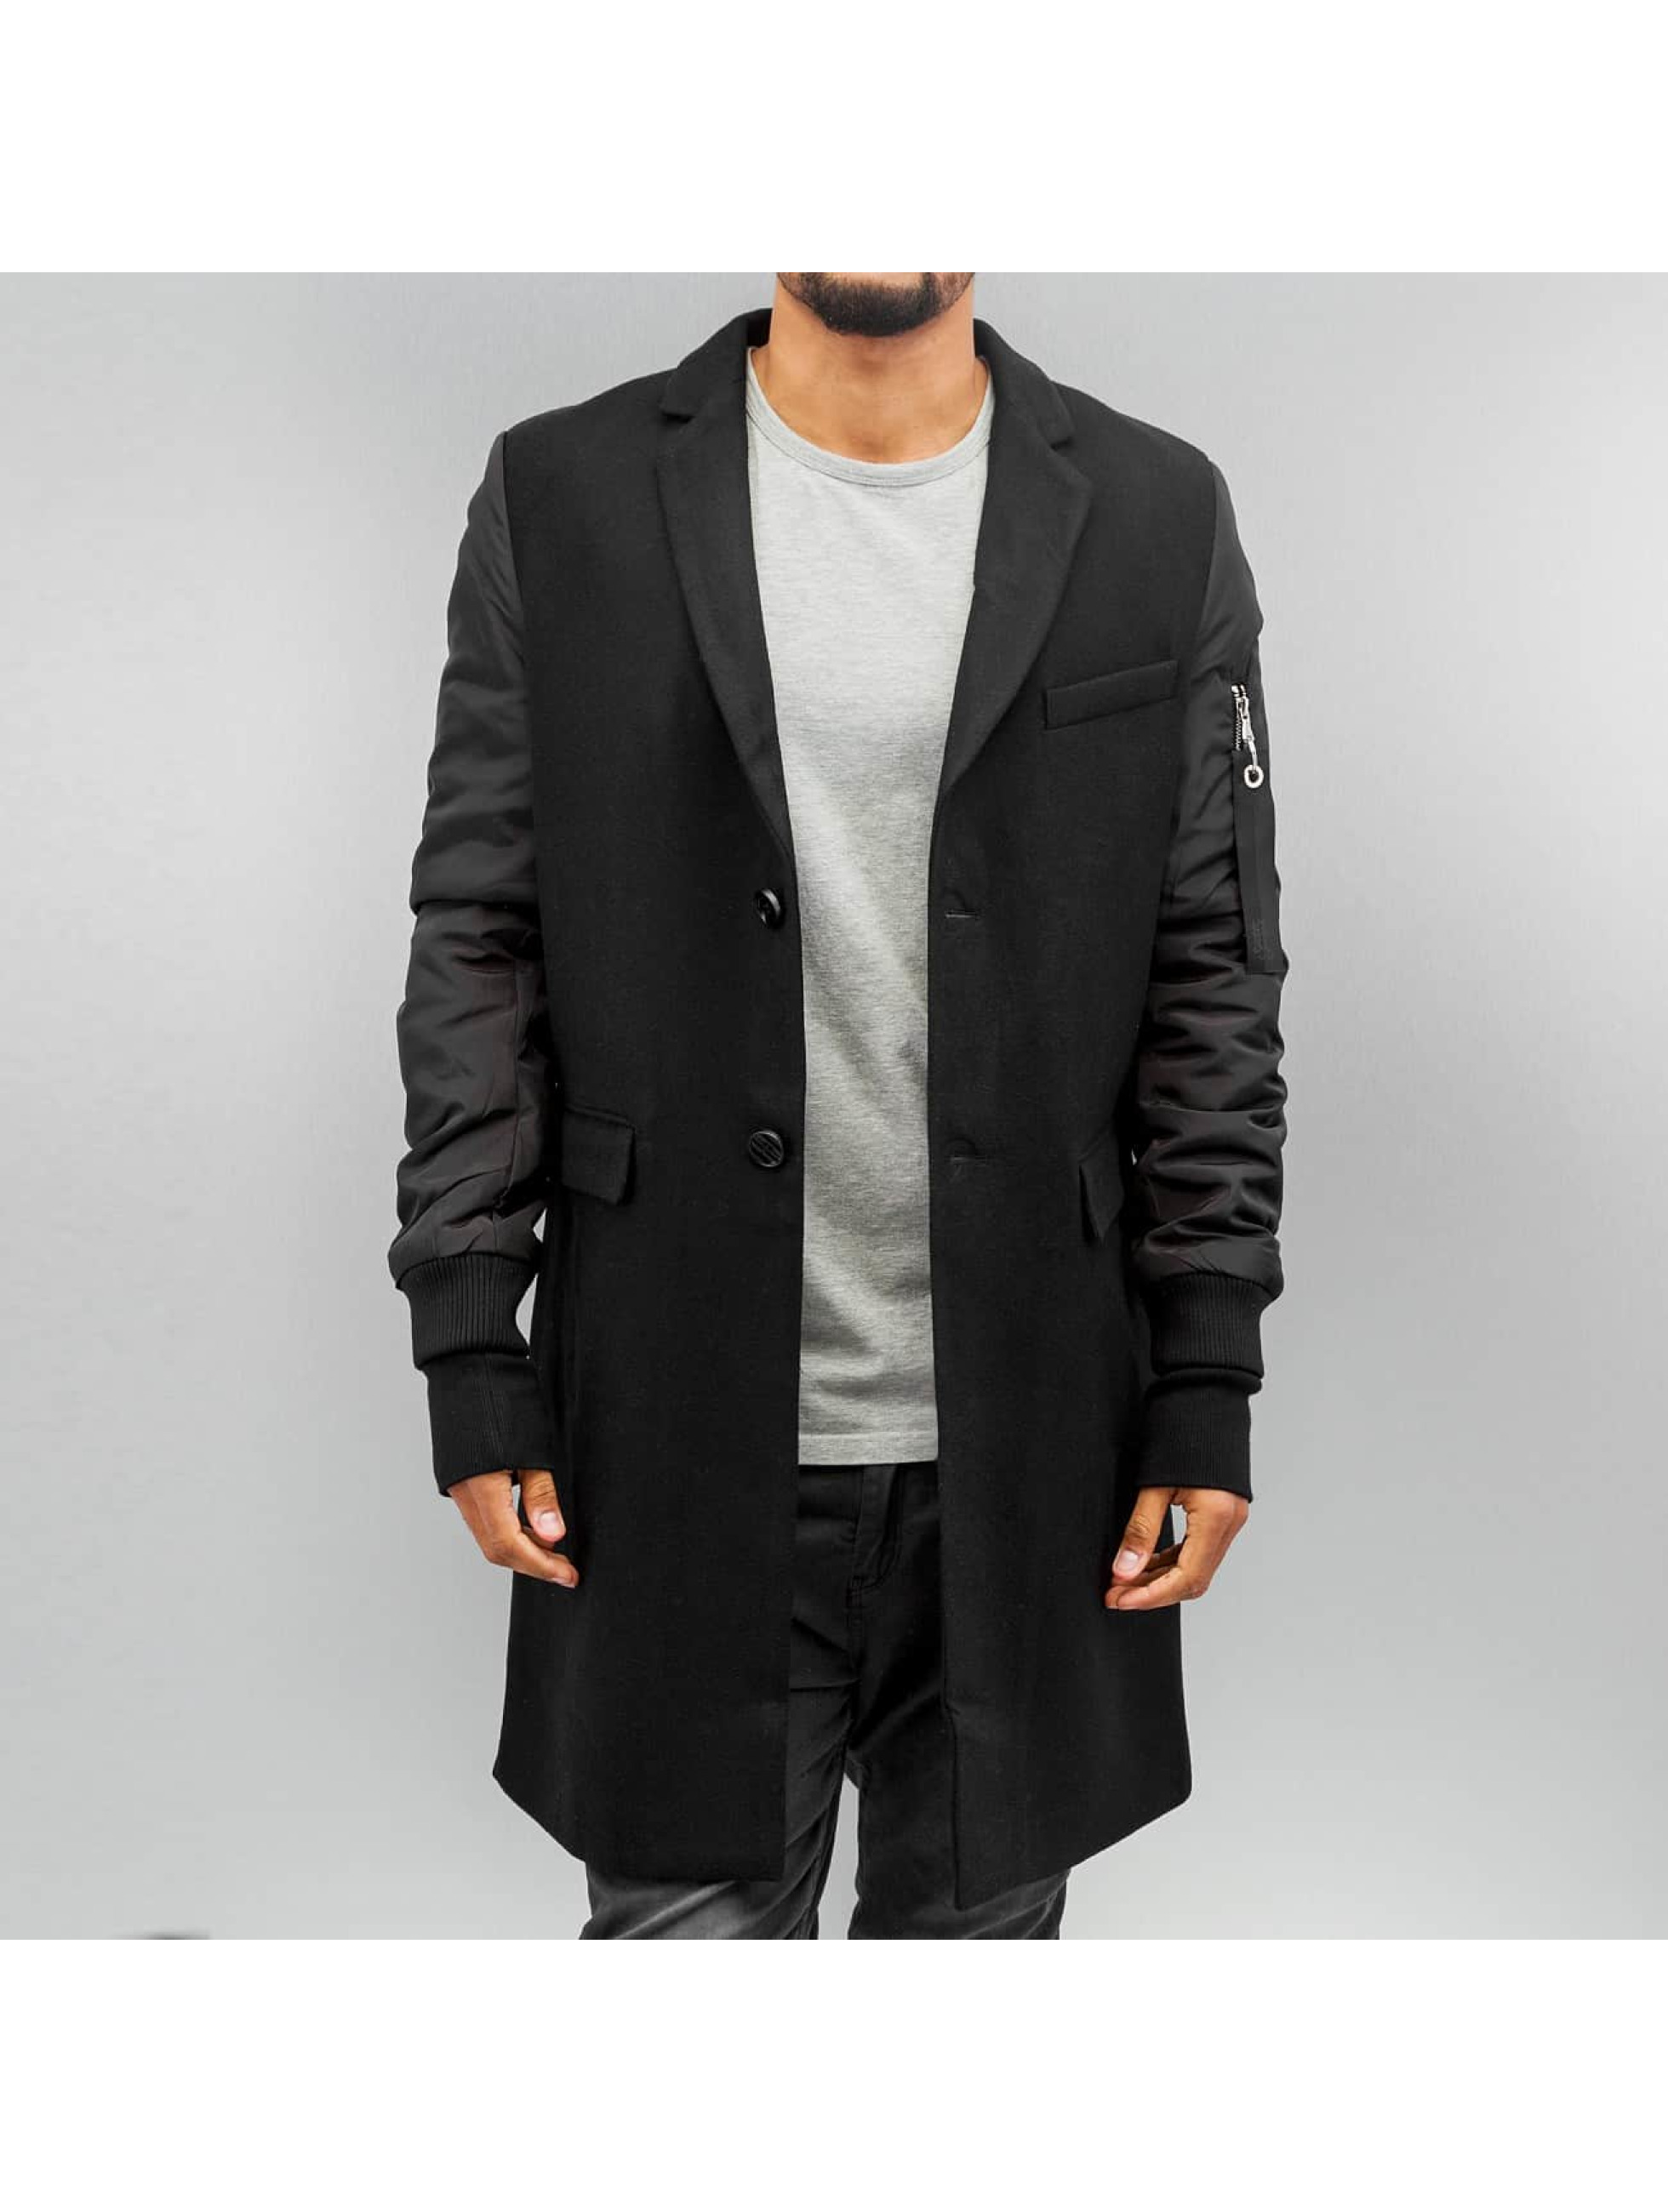 Mantel Mix Pu Leather in schwarz